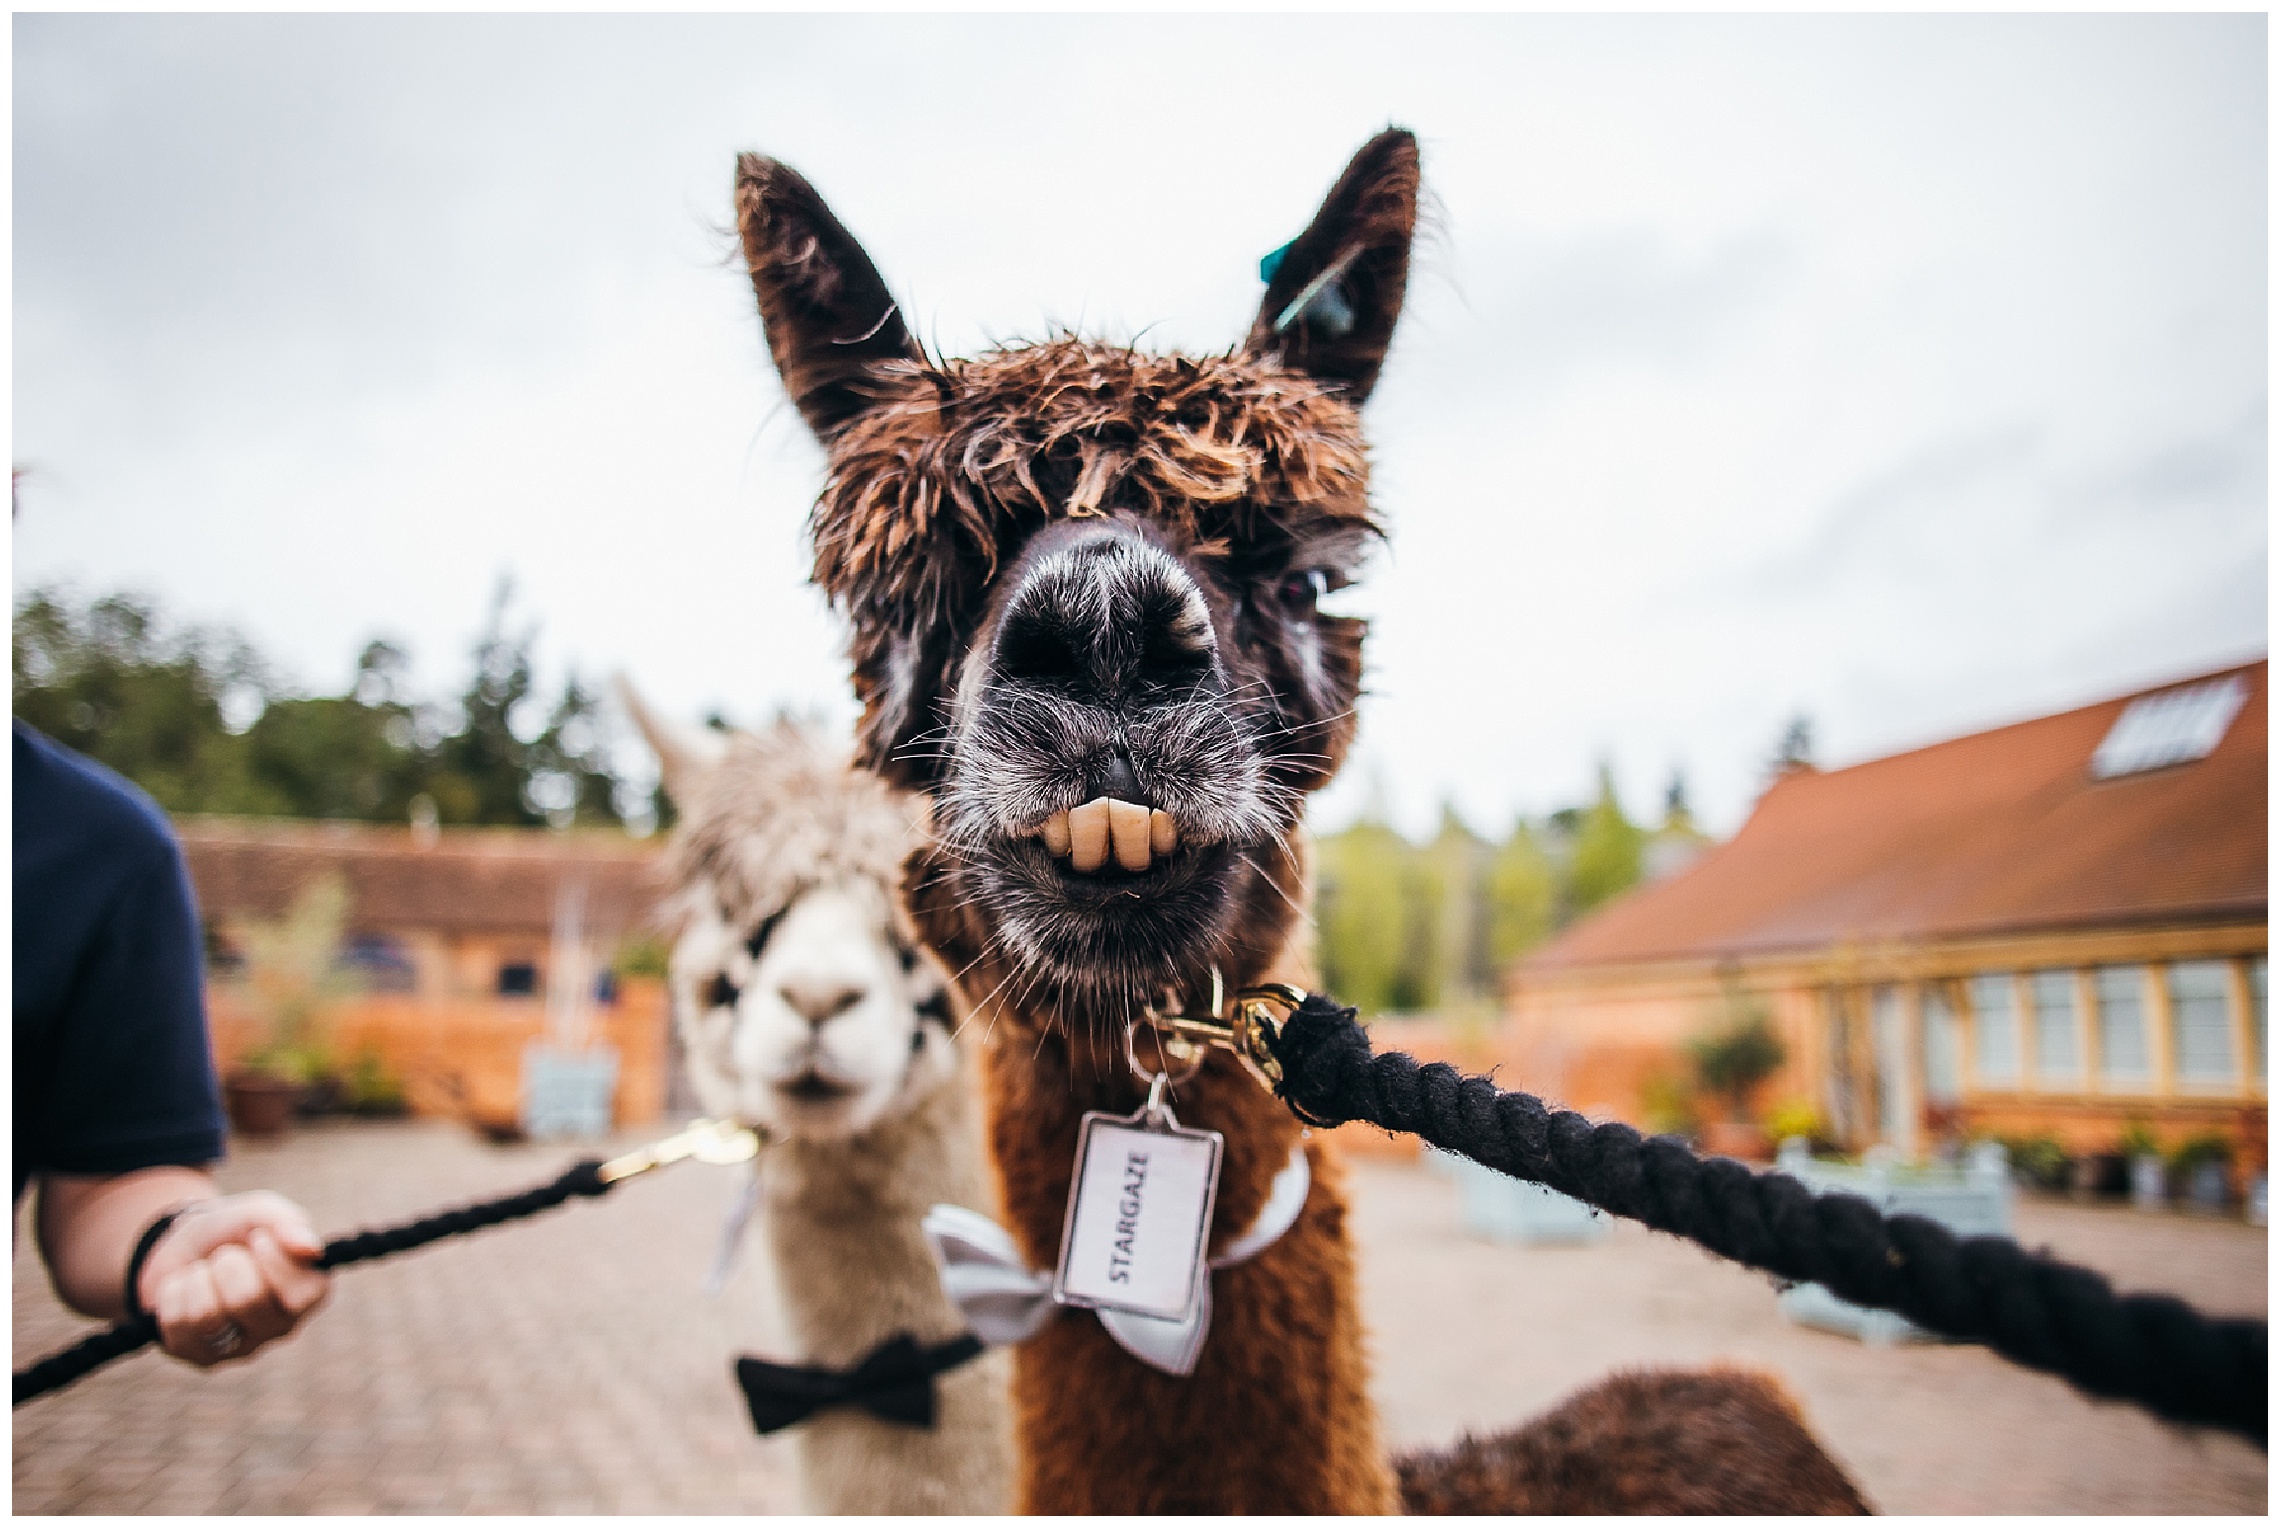 Brown alpaca stands close to camera at wedding venue bassmead